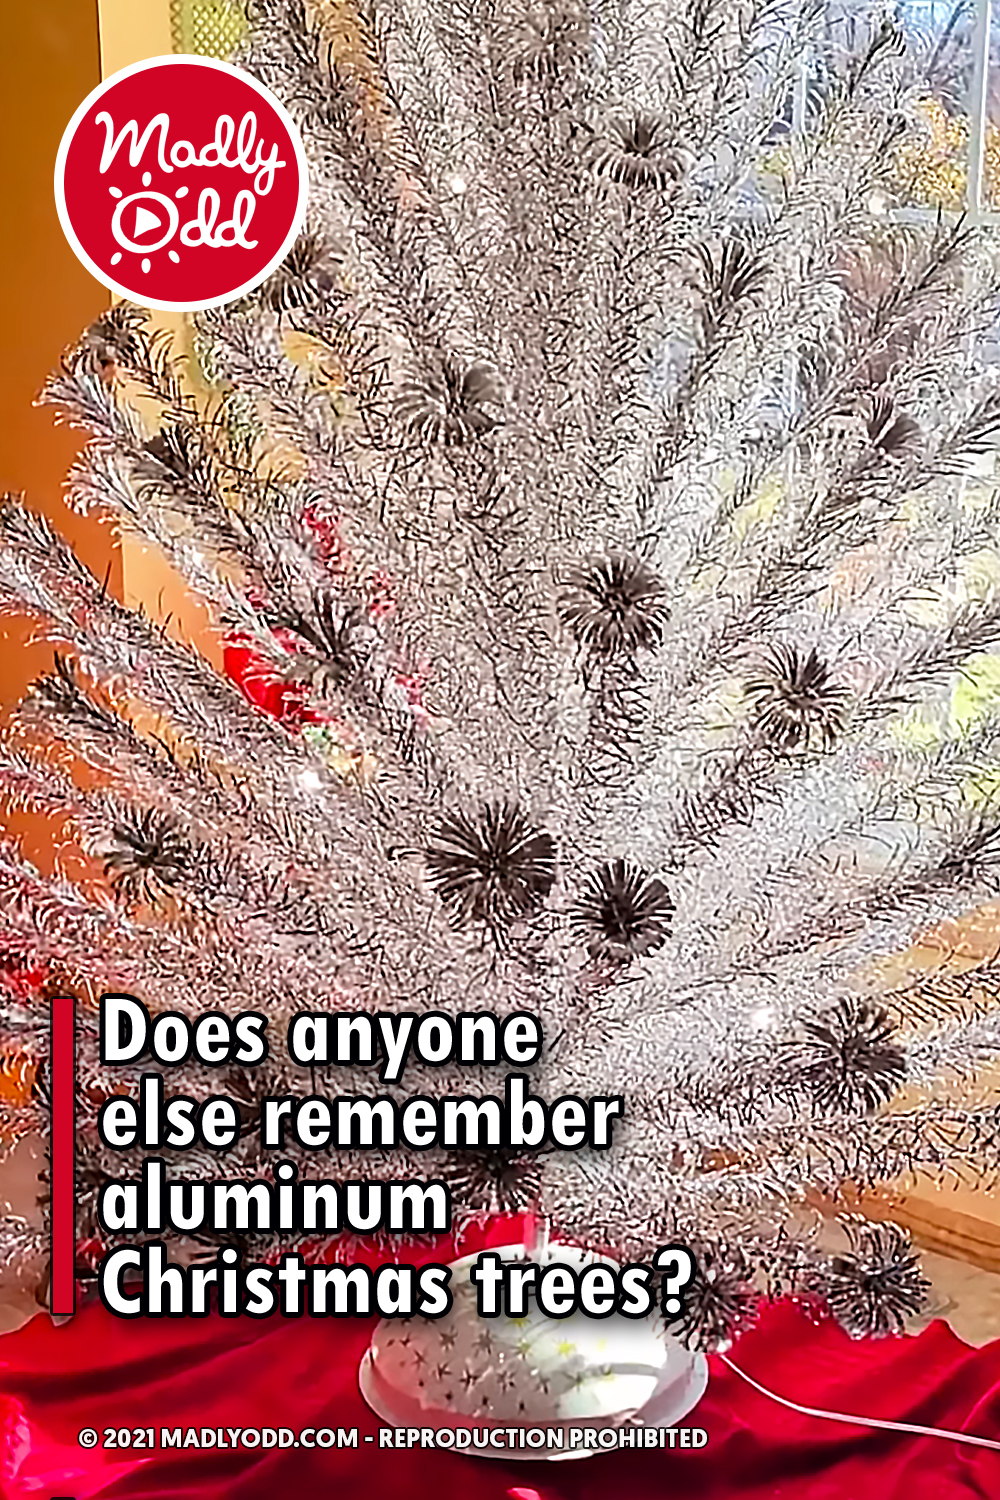 Does anyone else remember aluminum Christmas trees?